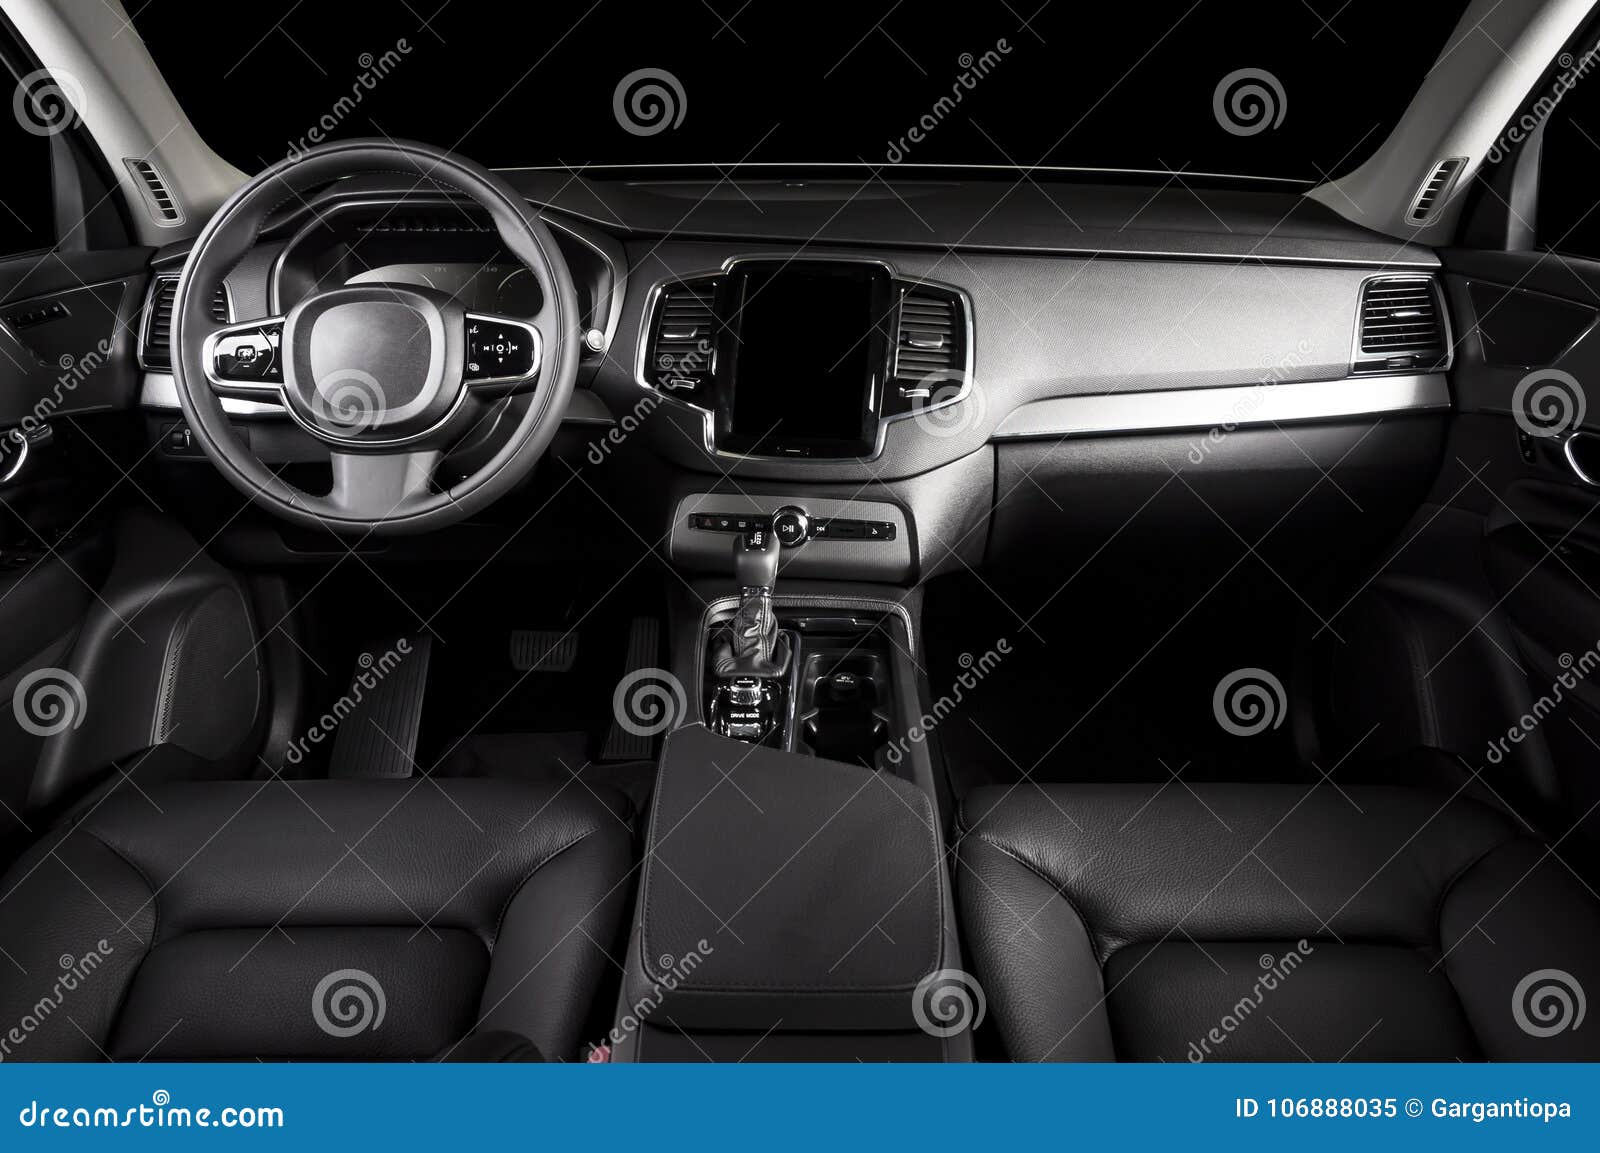 https://thumbs.dreamstime.com/z/perforated-leather-texture-background-design-dark-red-modern-luxury-prestige-car-interior-dashboard-steering-wheel-black-106888035.jpg